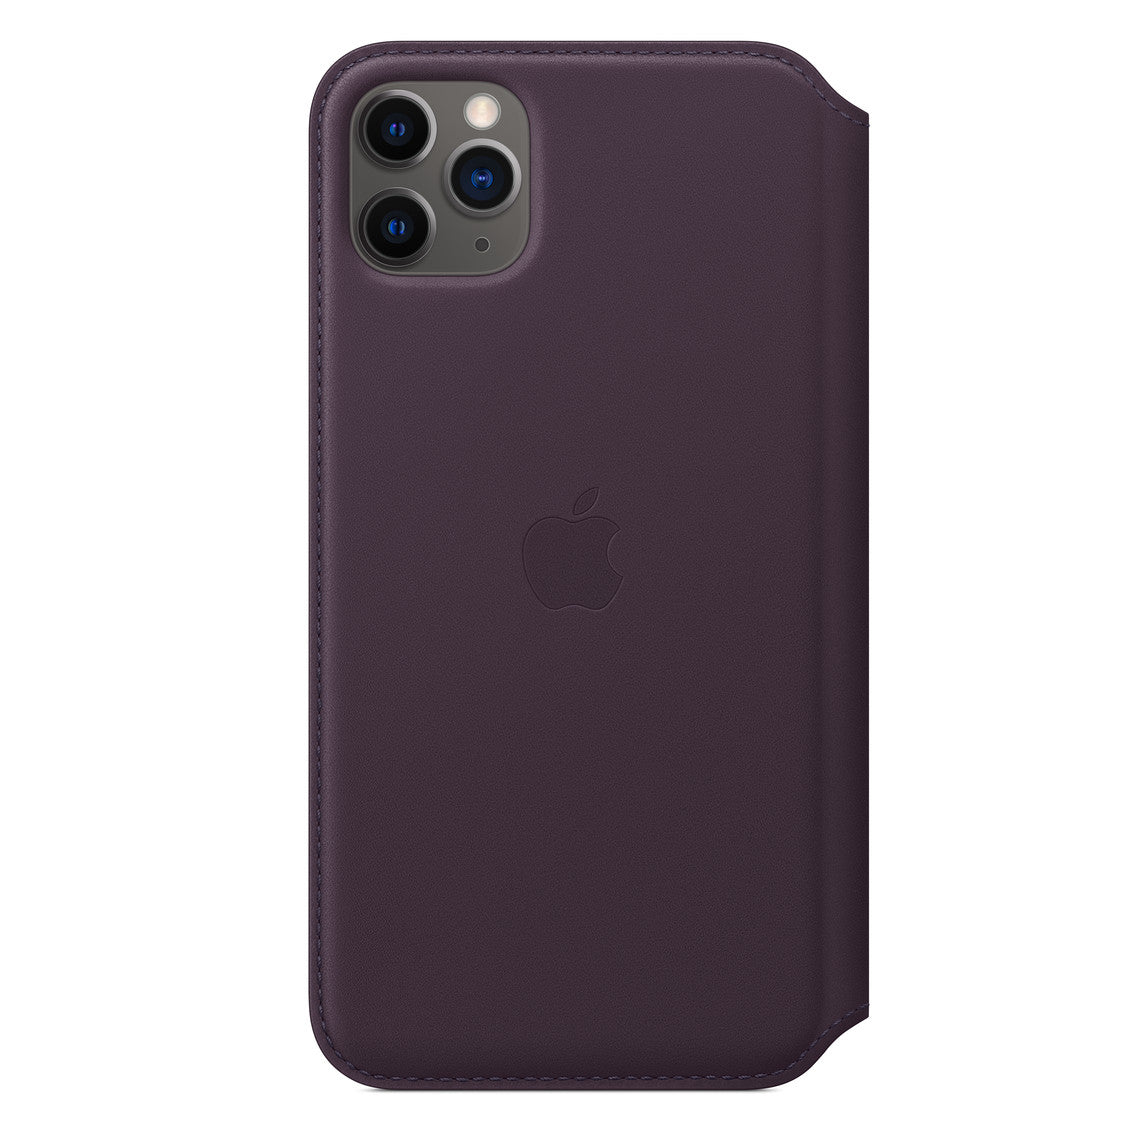 Apple iPhone 11 Pro Max Leather Folio Case - Aubergine Aubergine New - Sealed